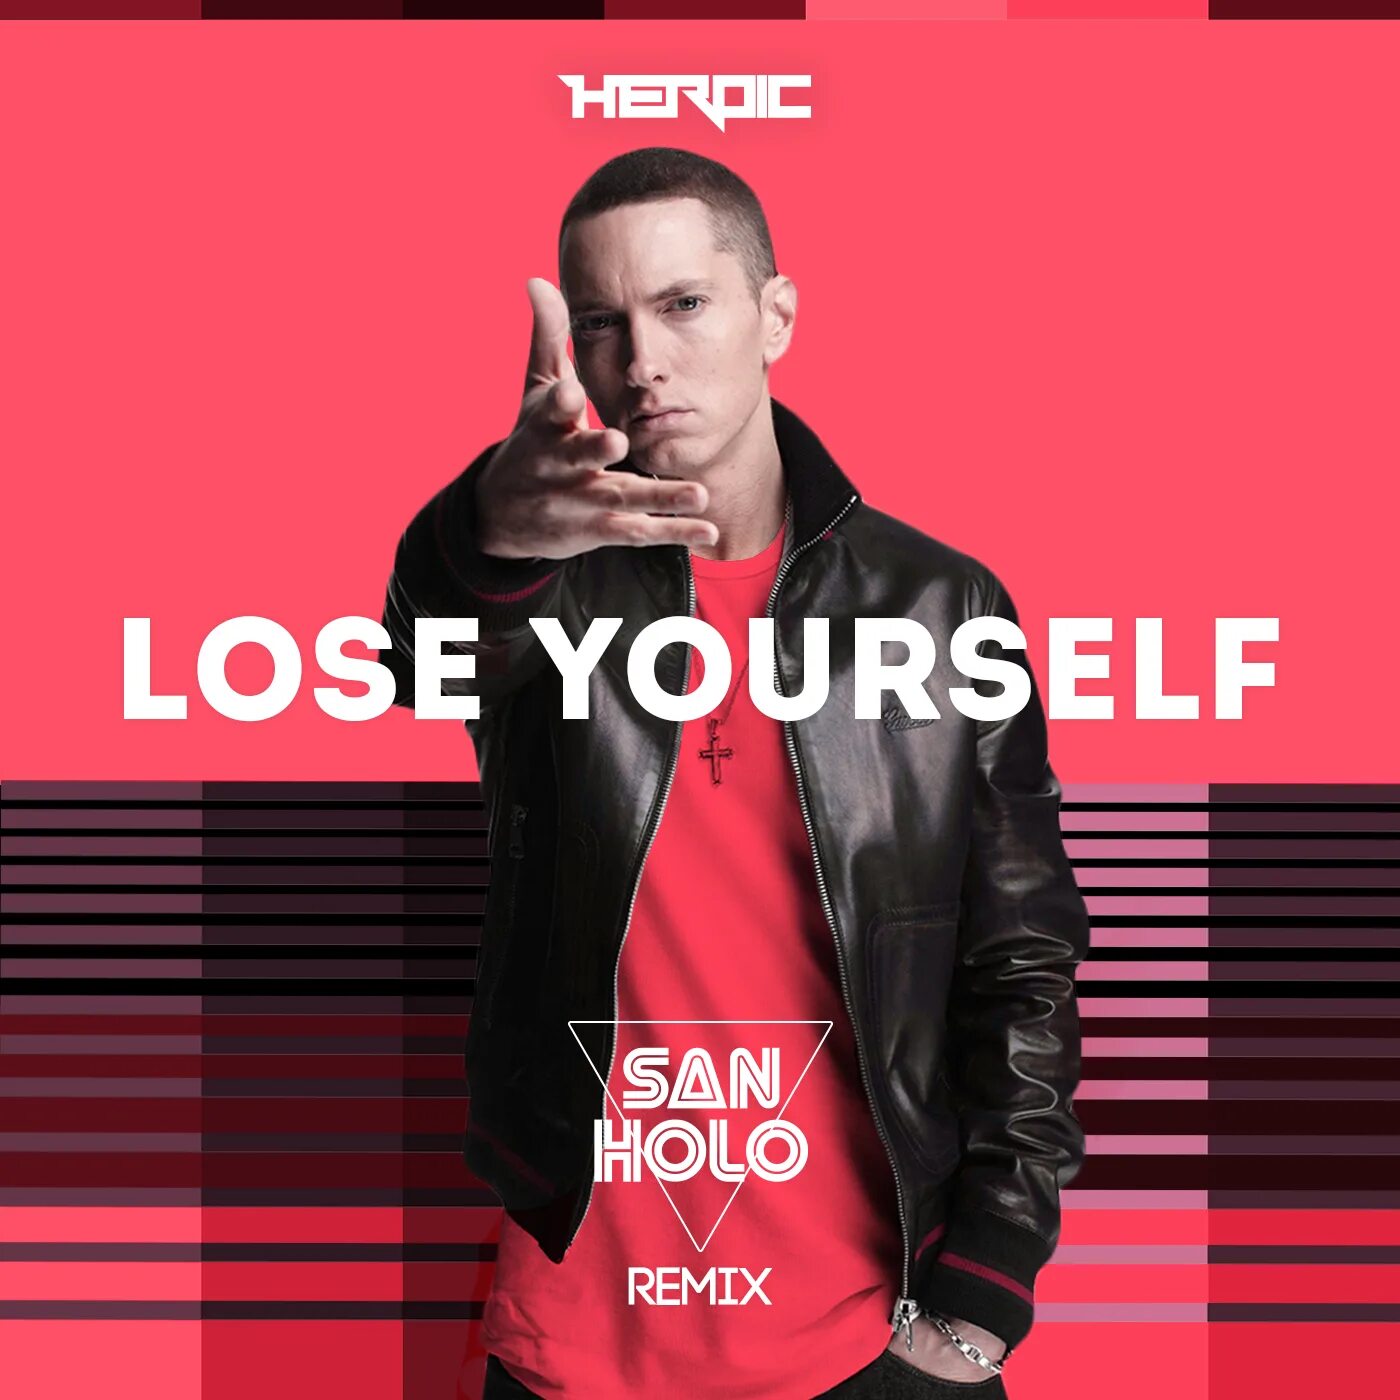 Lose yourself. Eminem lose yourself. Эминем афиша. Lose yourself Эминем обложка. Lose yourself mp3